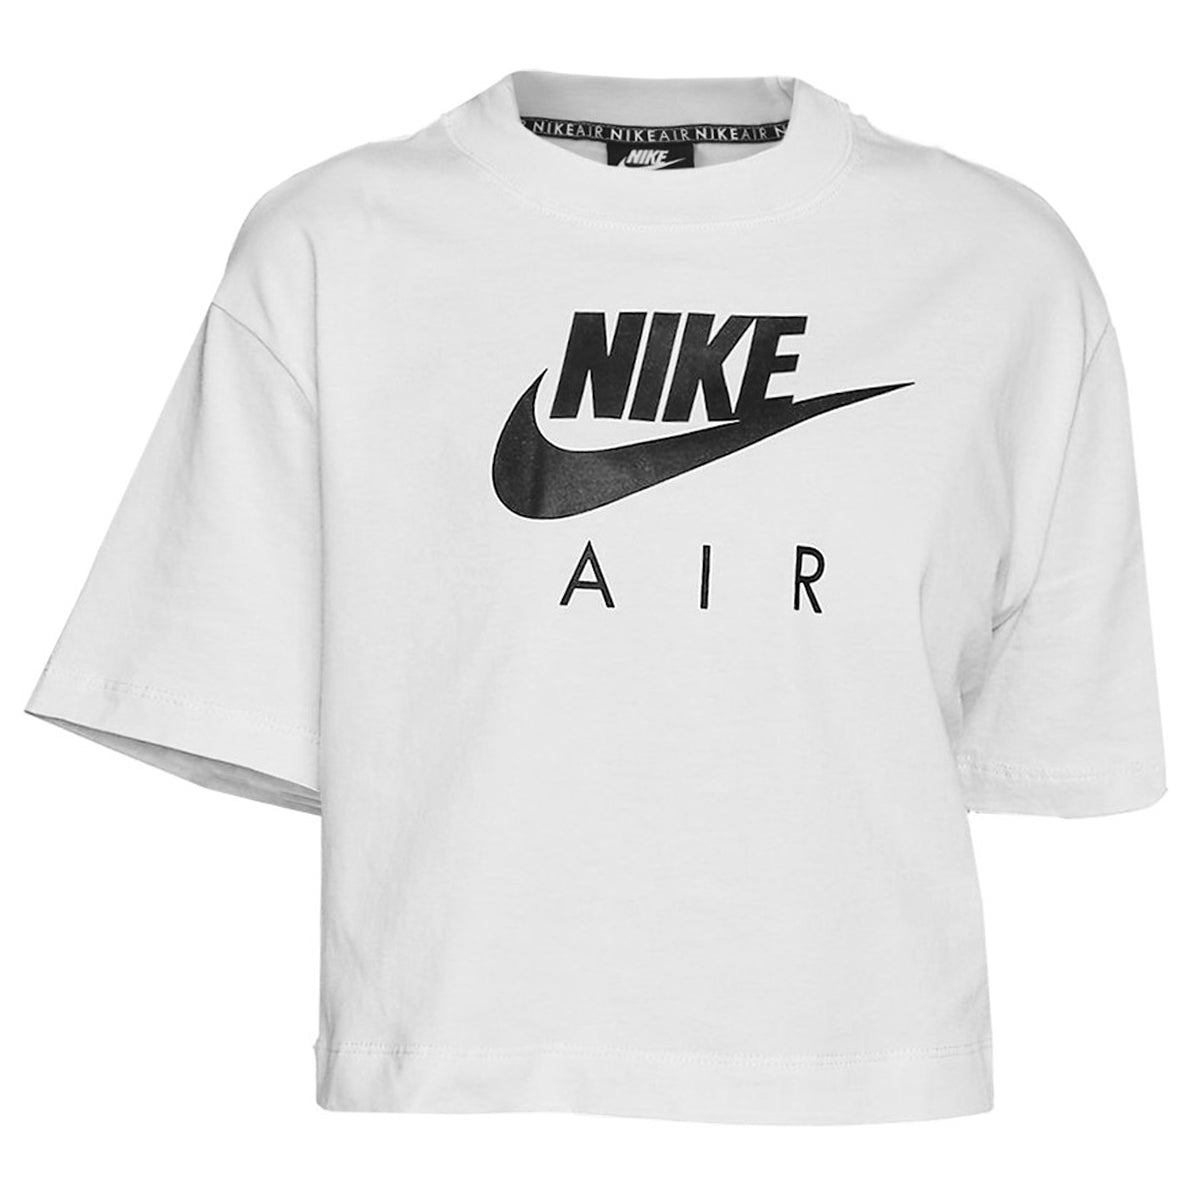 Nike Air Short Sleeve Top Womens Style : Bv4777